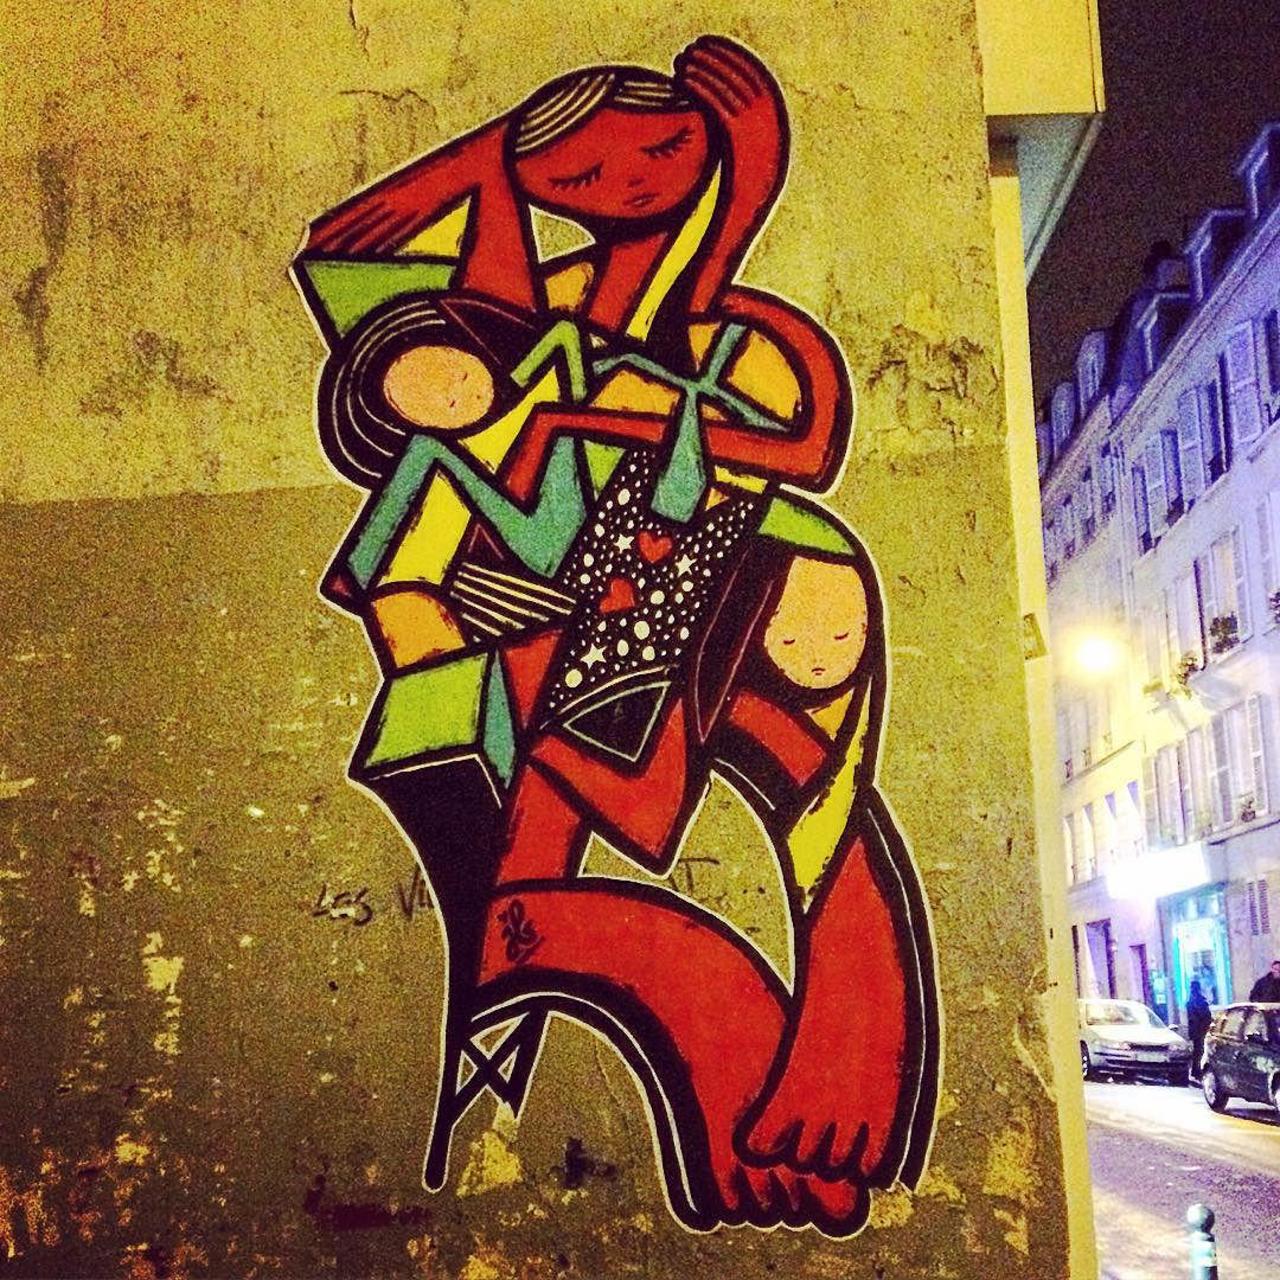 #Paris #graffiti photo by @julosteart http://ift.tt/1LteyNK #StreetArt http://t.co/PxBJDQt06L